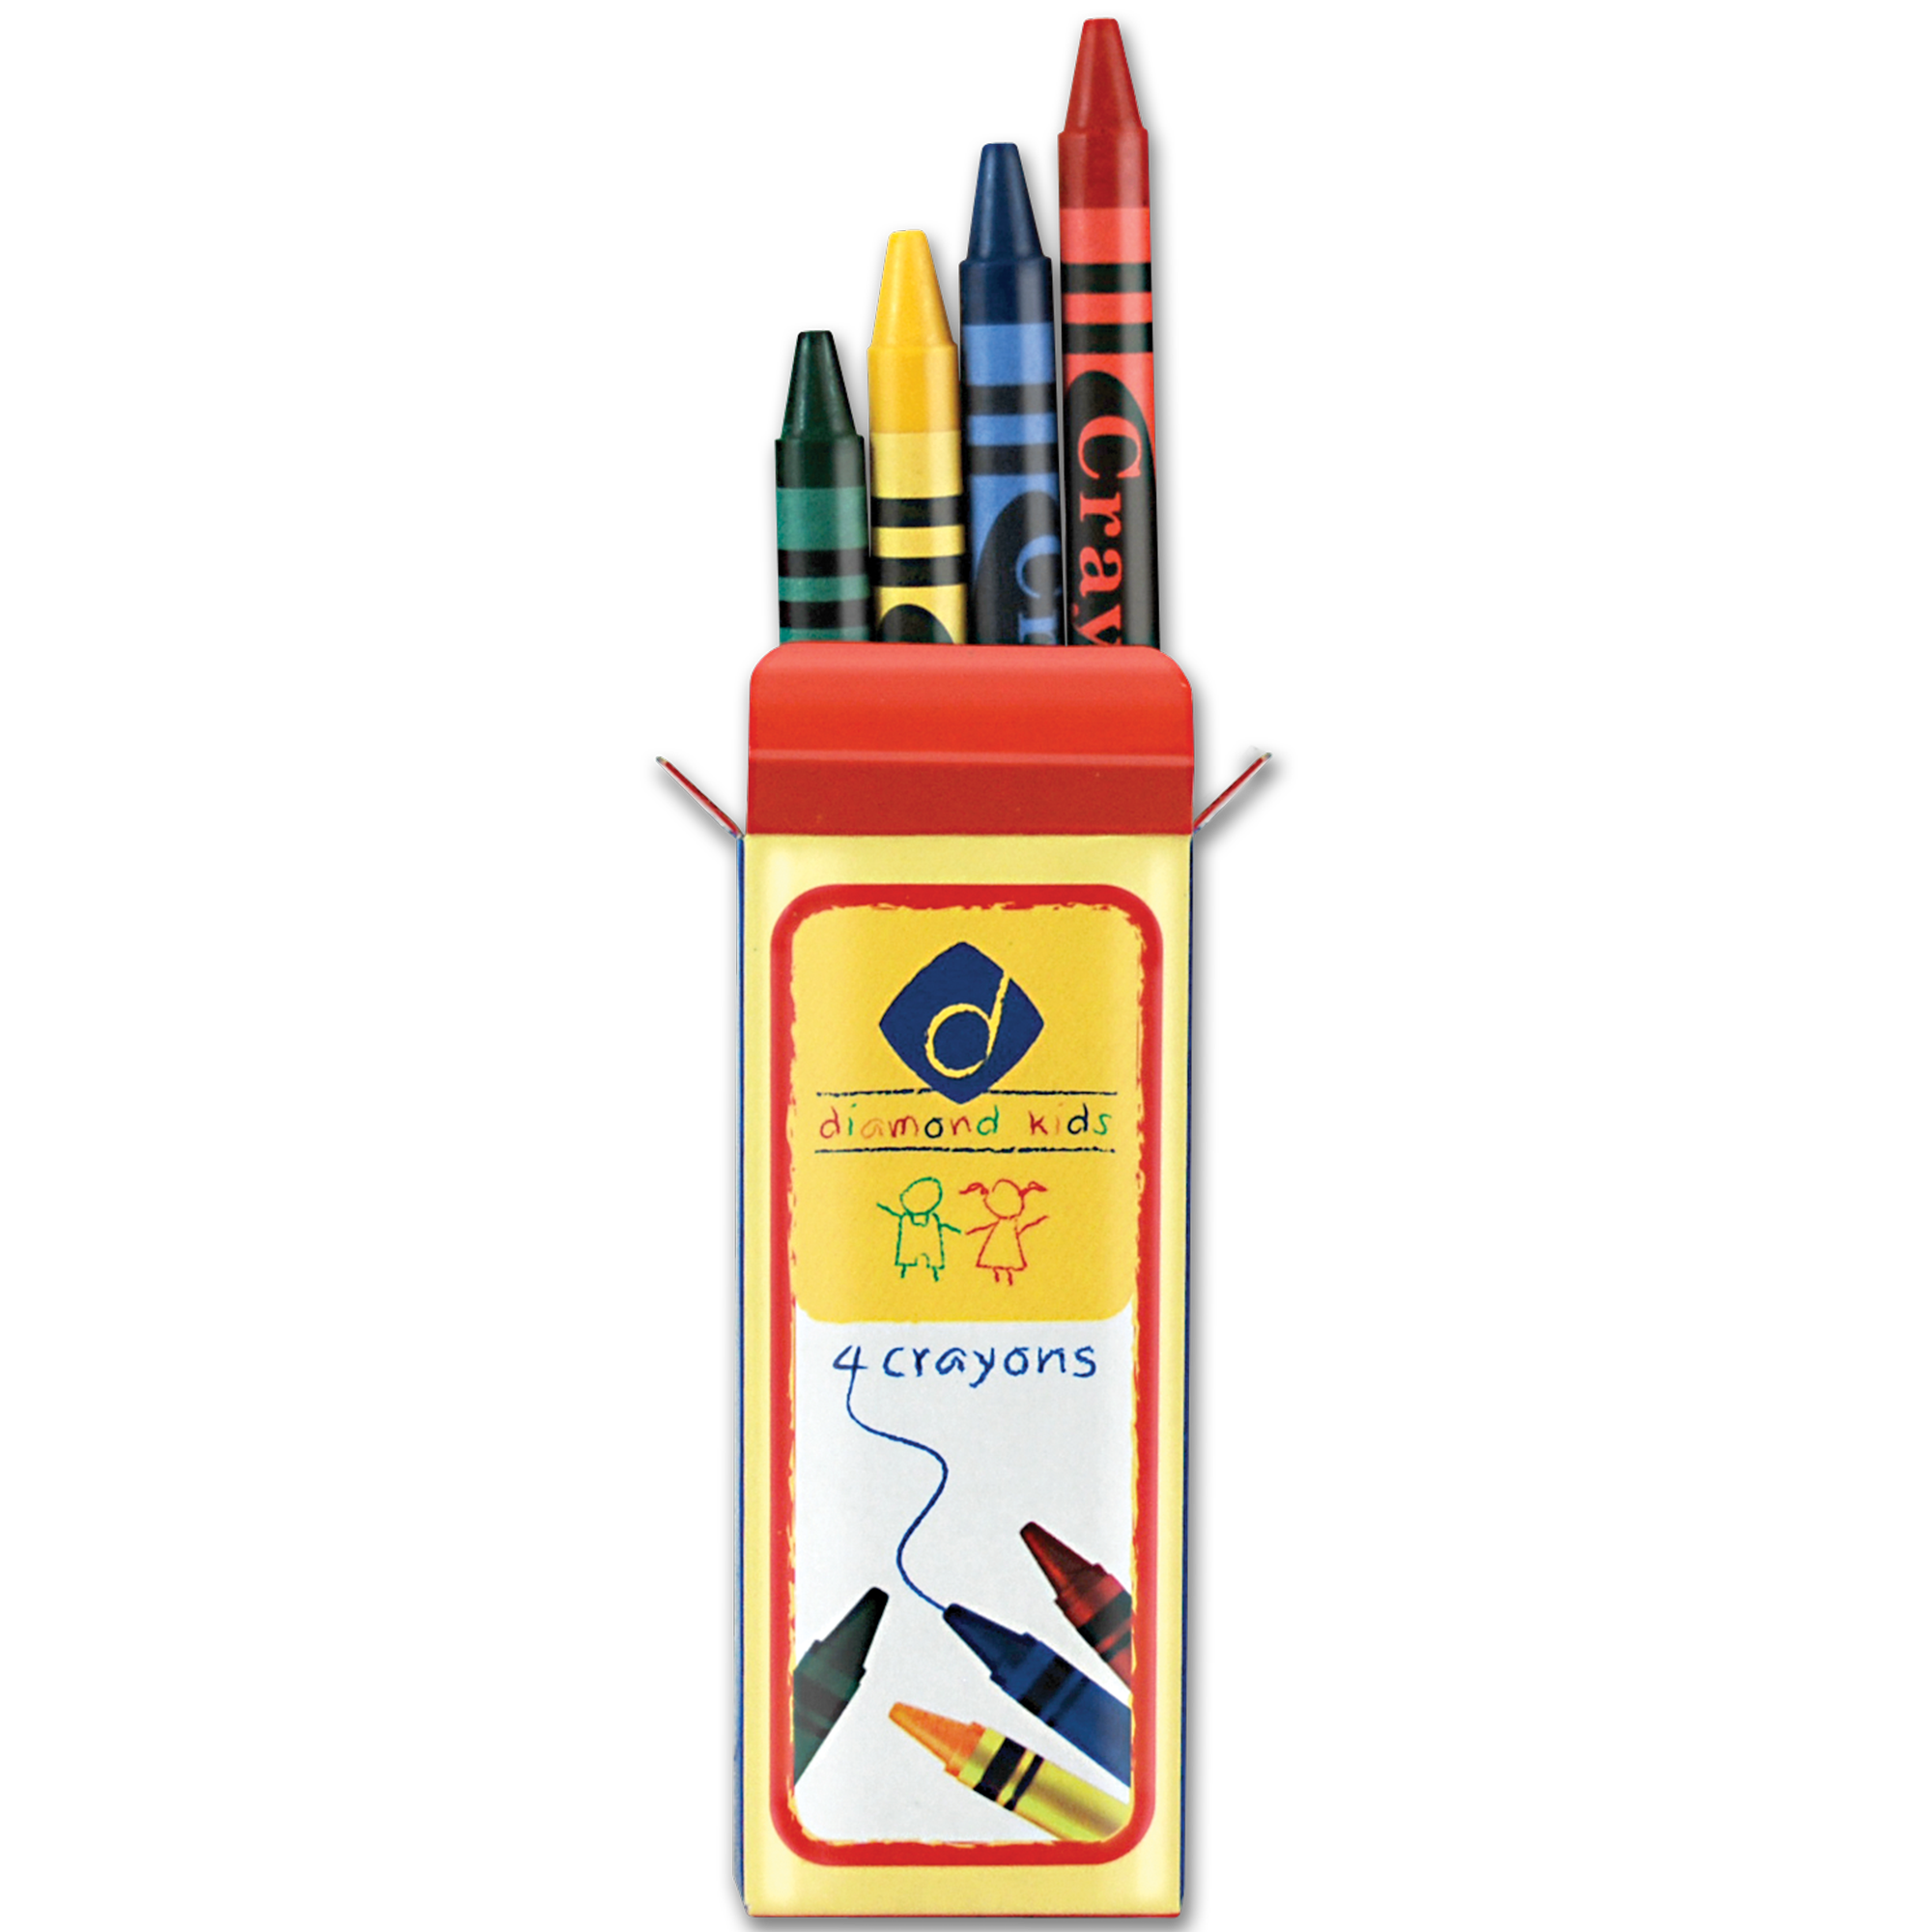 360 Pack Bulk Case of 4 Count Crayons, Crayola.com